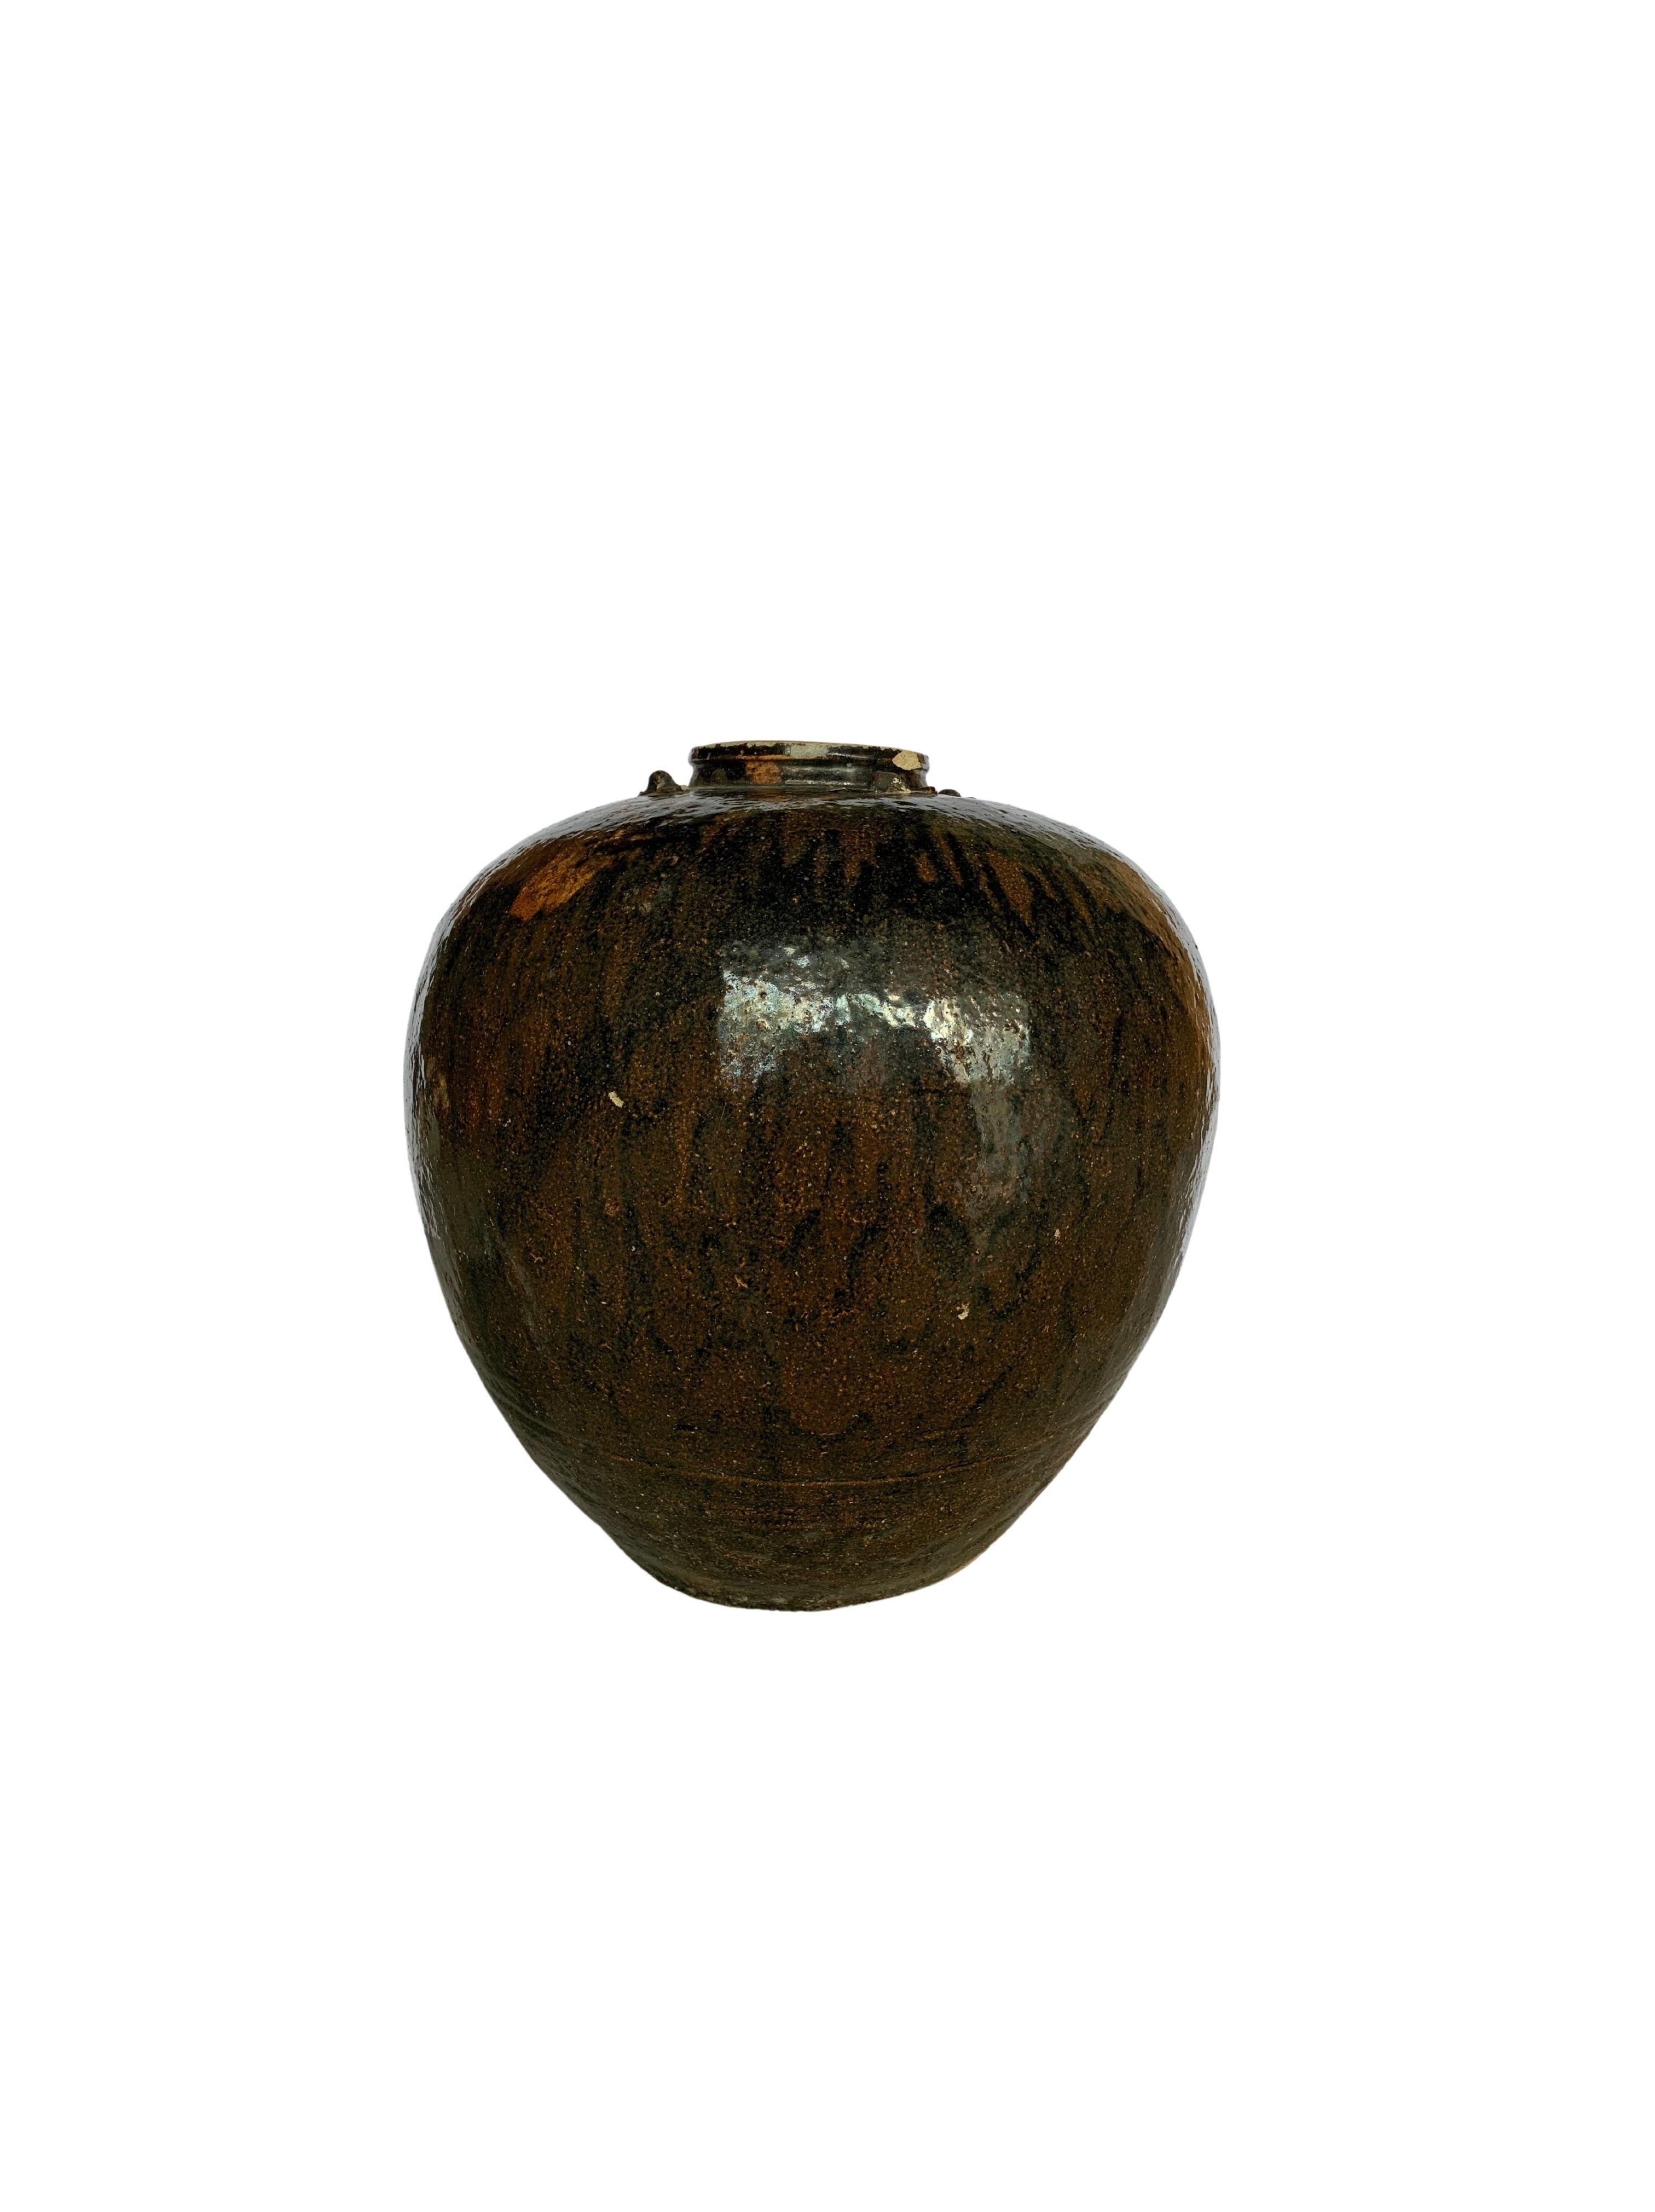 Qing Antique Chinese Brown / Black Glazed Pickling Jar, c. 1900 For Sale